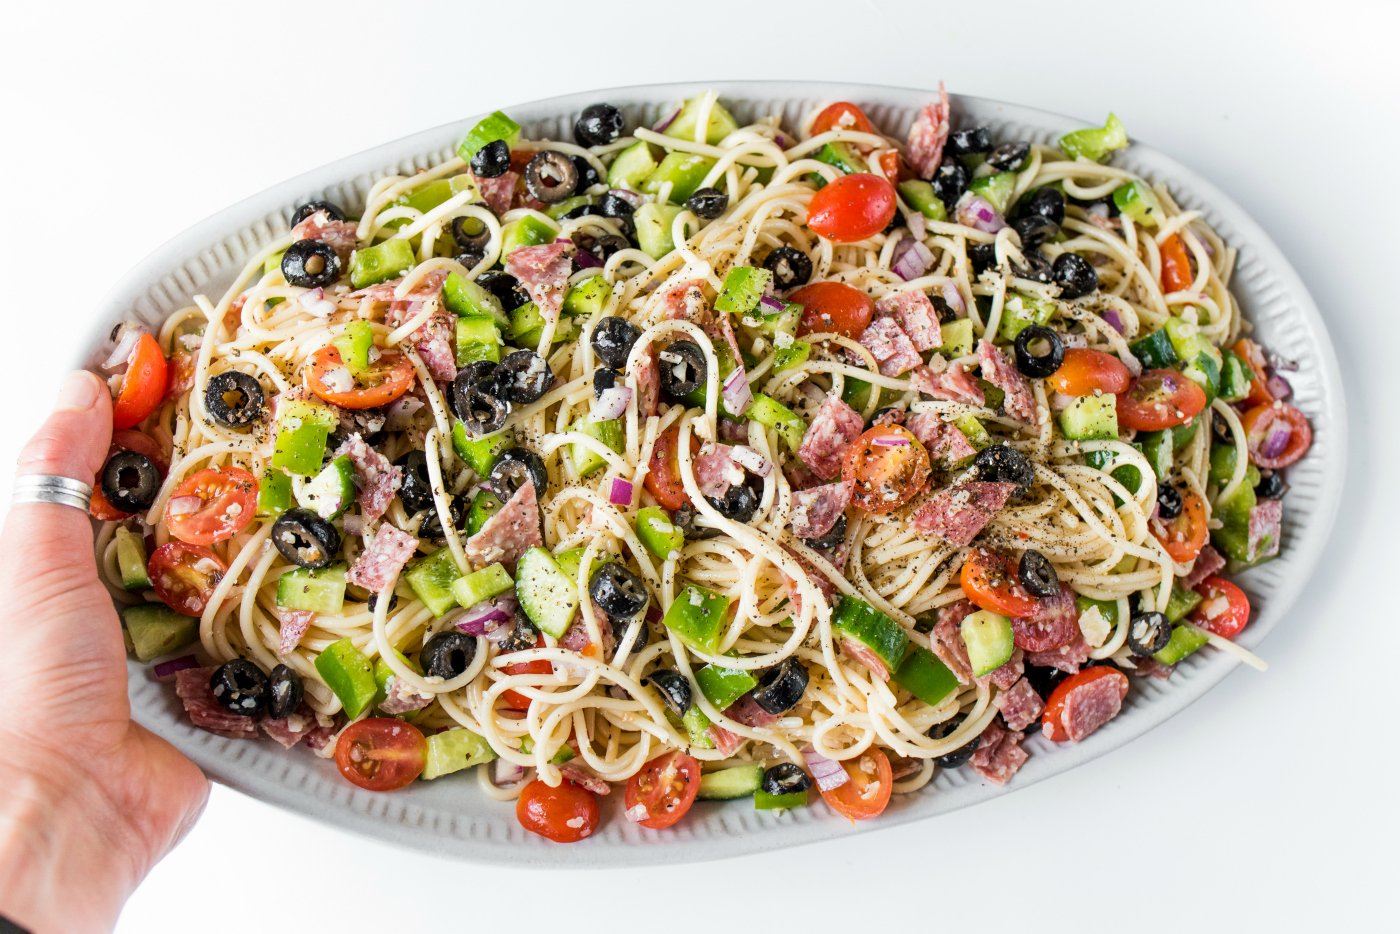 https://reluctantentertainer.com/wp-content/uploads/2017/07/Summer-Italian-Spaghetti-Salad-4.jpg